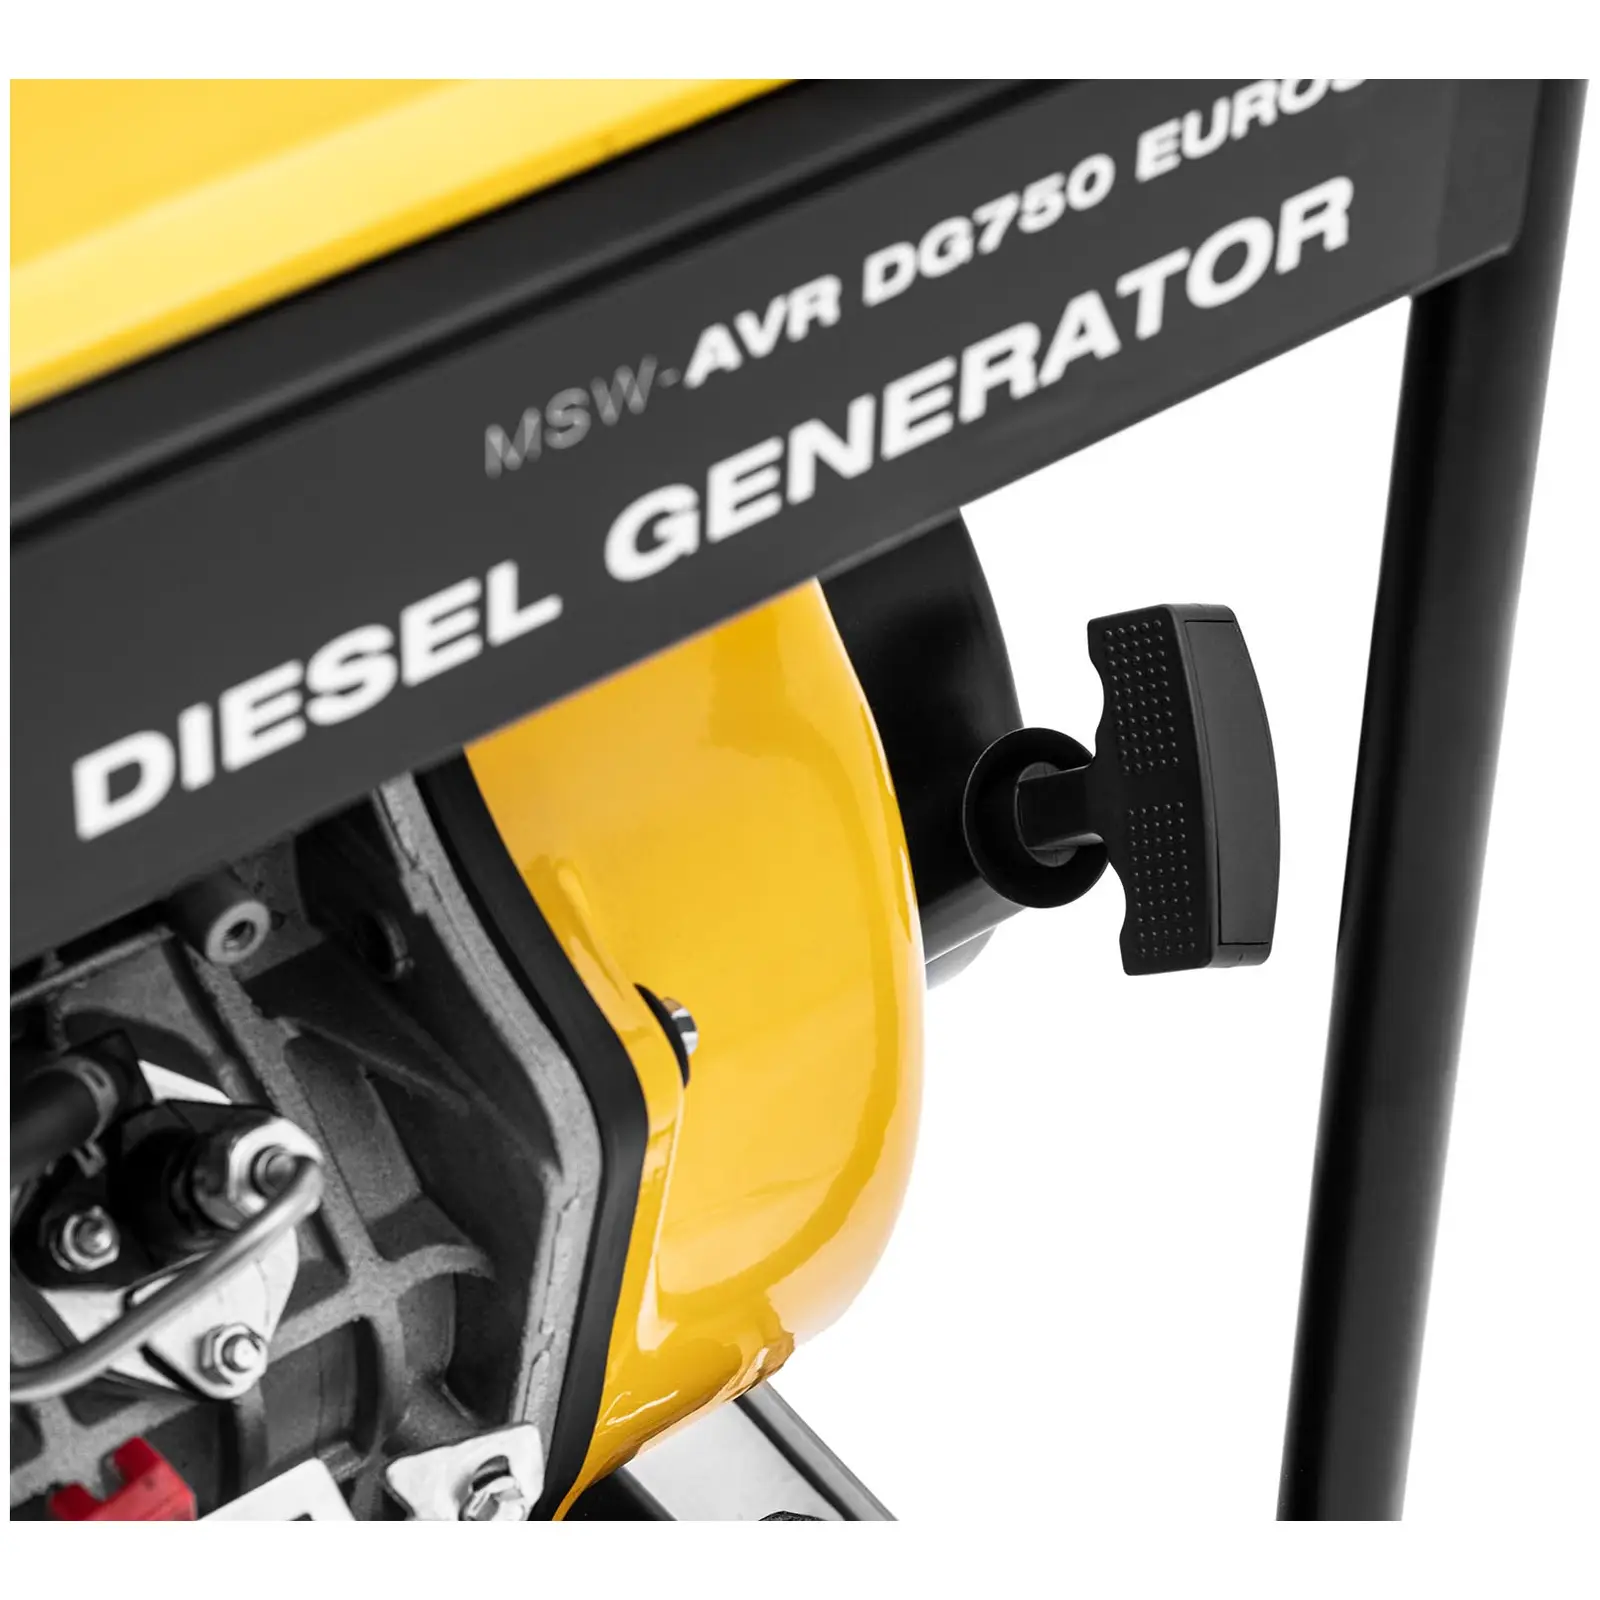 Generator diesel - {{putere_maximă_1007}} W - {{capacitate rezervor combustibil_1525_temp}} L - 230/400 V - mobil - AVR - Euro 5